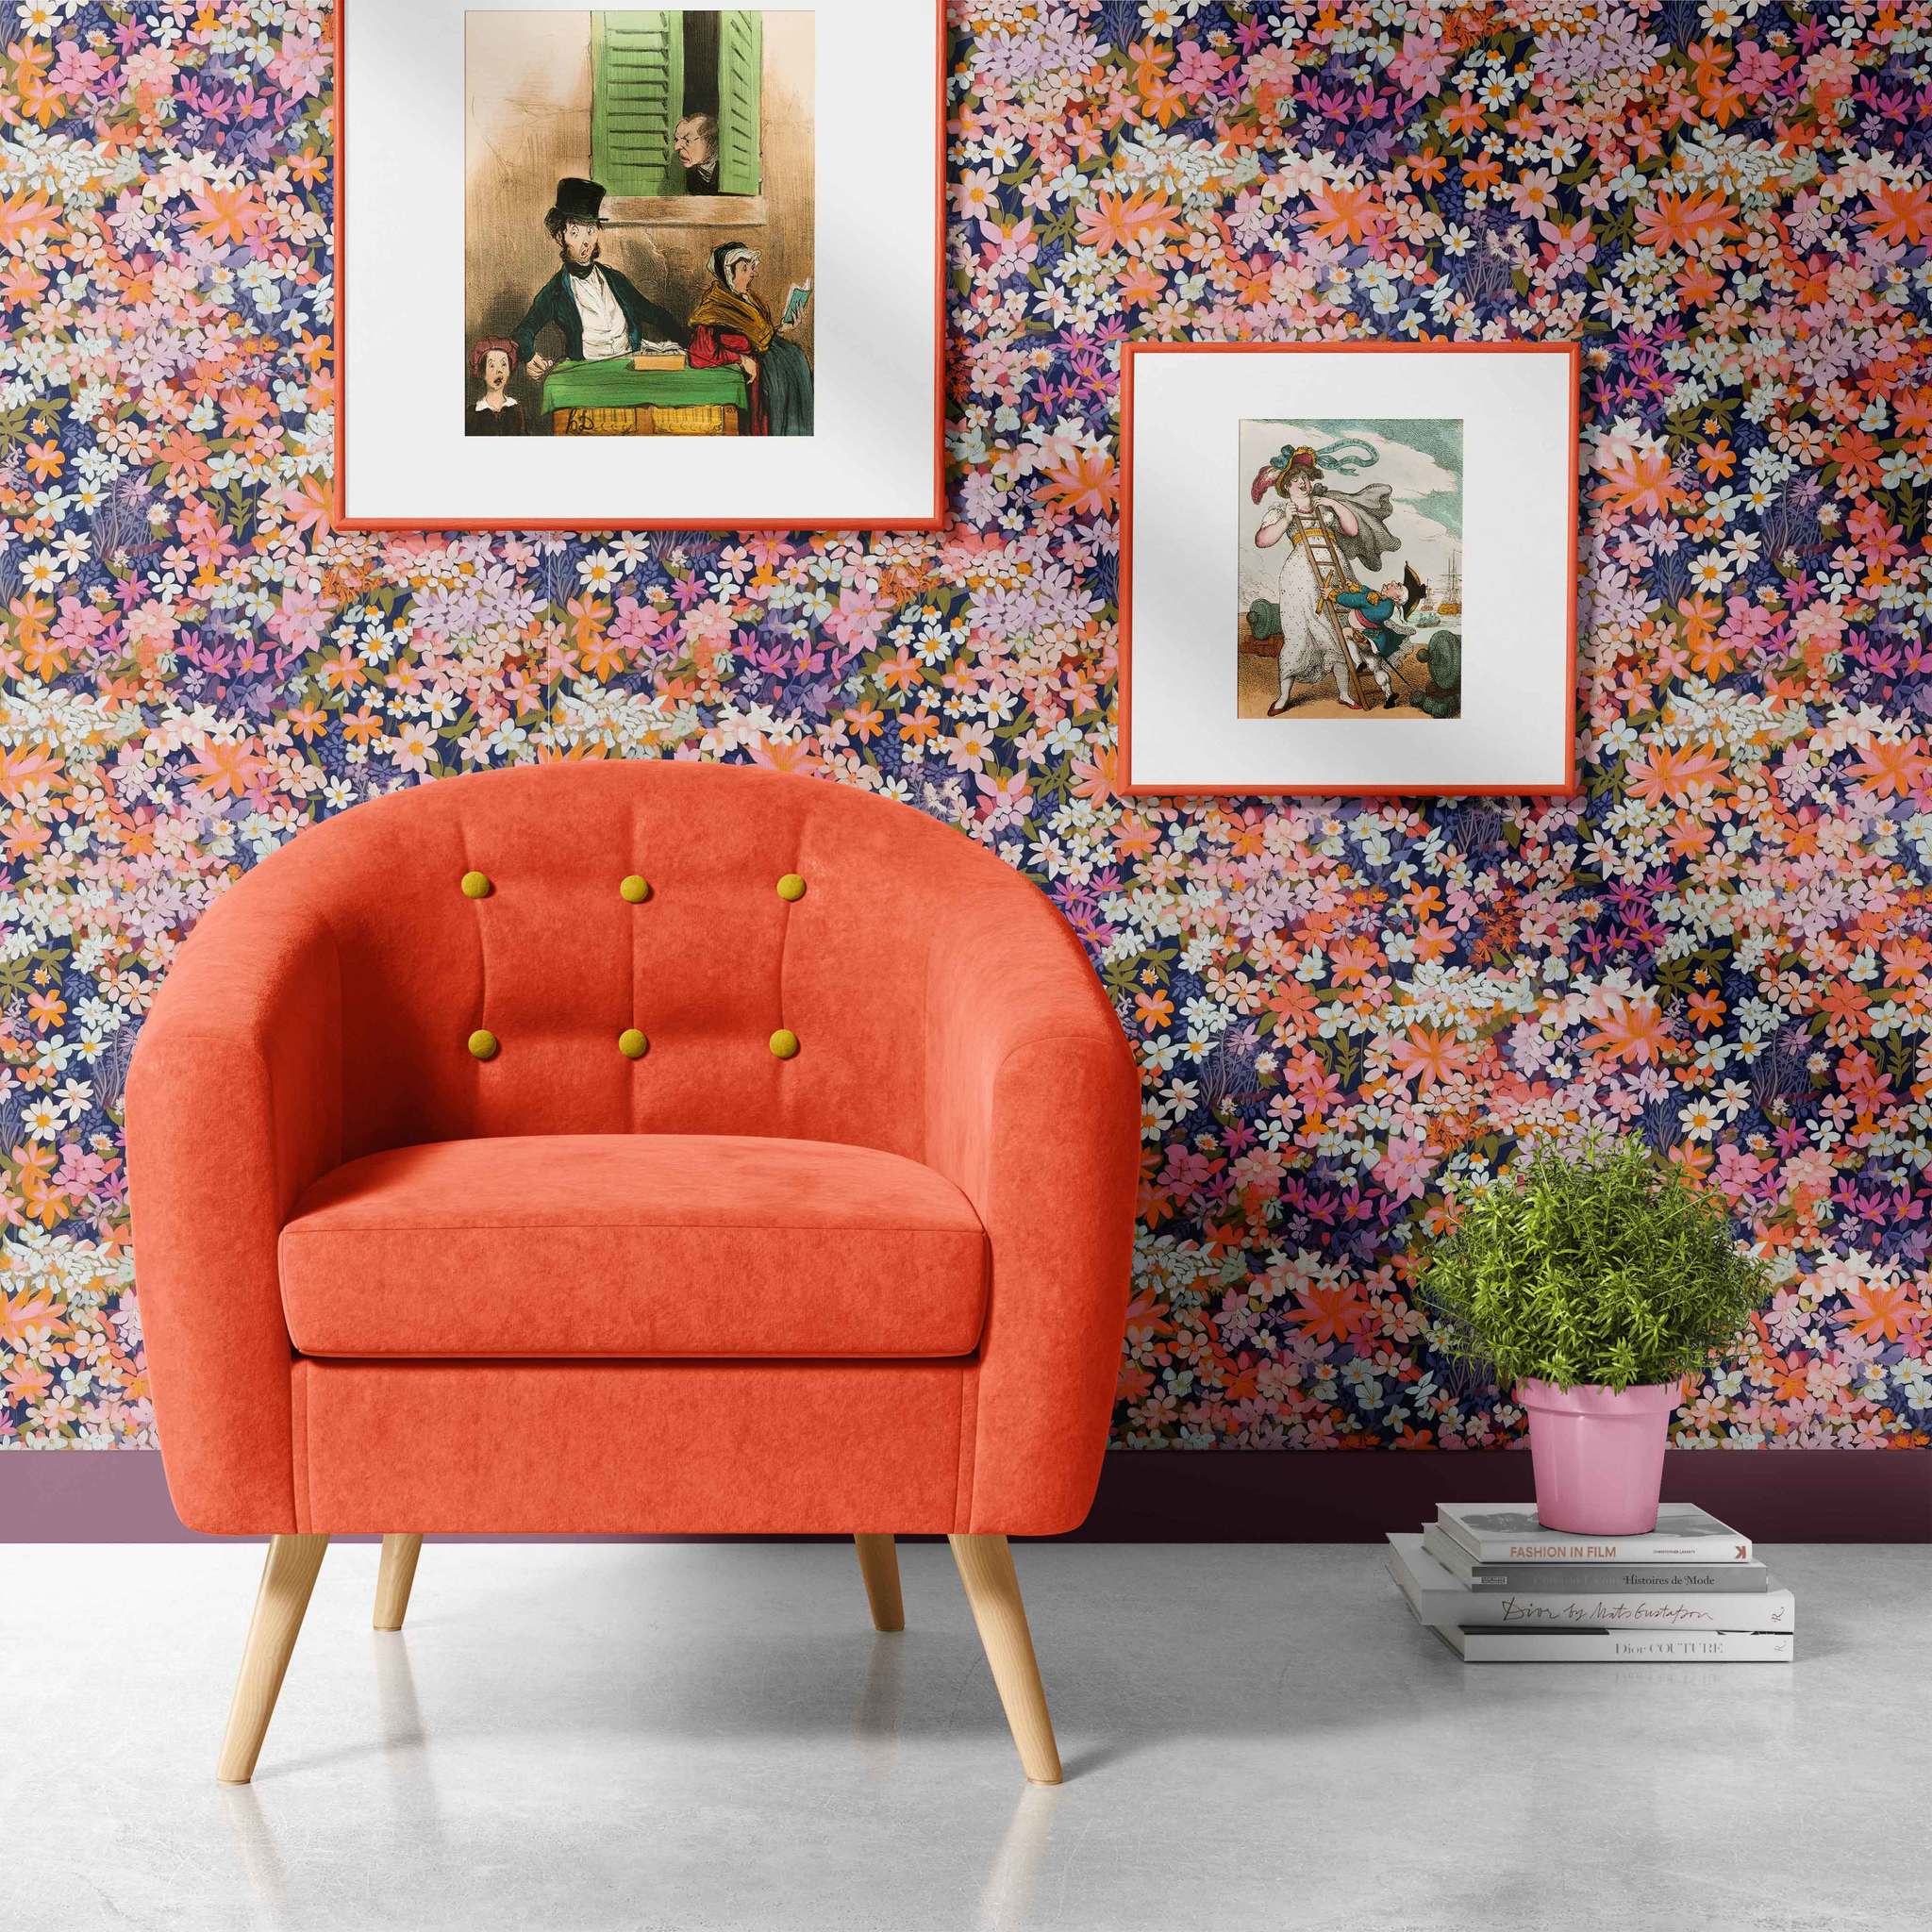 Ditty Bouquet Wallpaper Samples